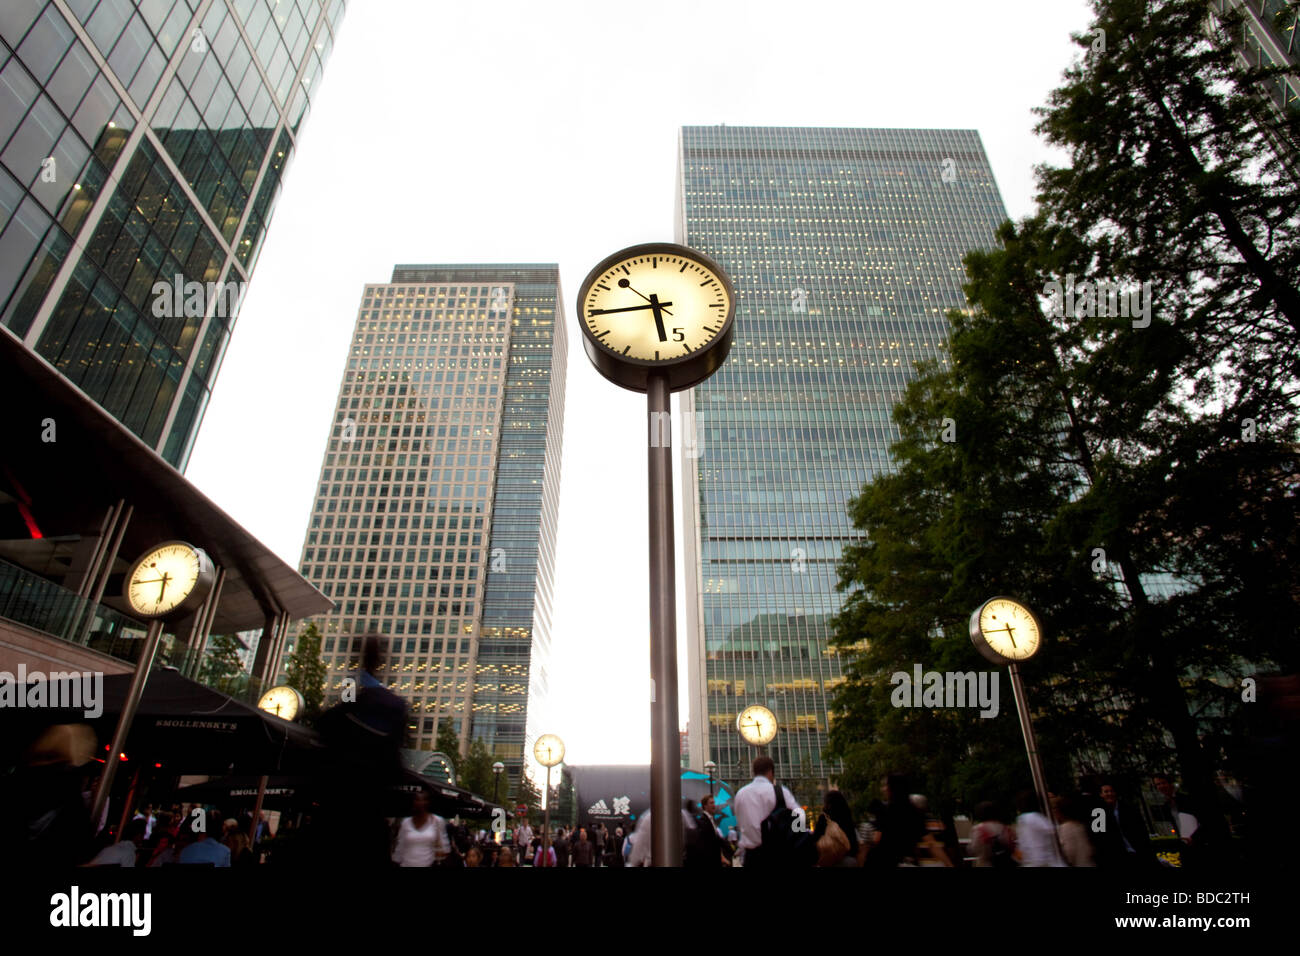 Clocks at financialdistrict Canary Wharf in London Stock Photo